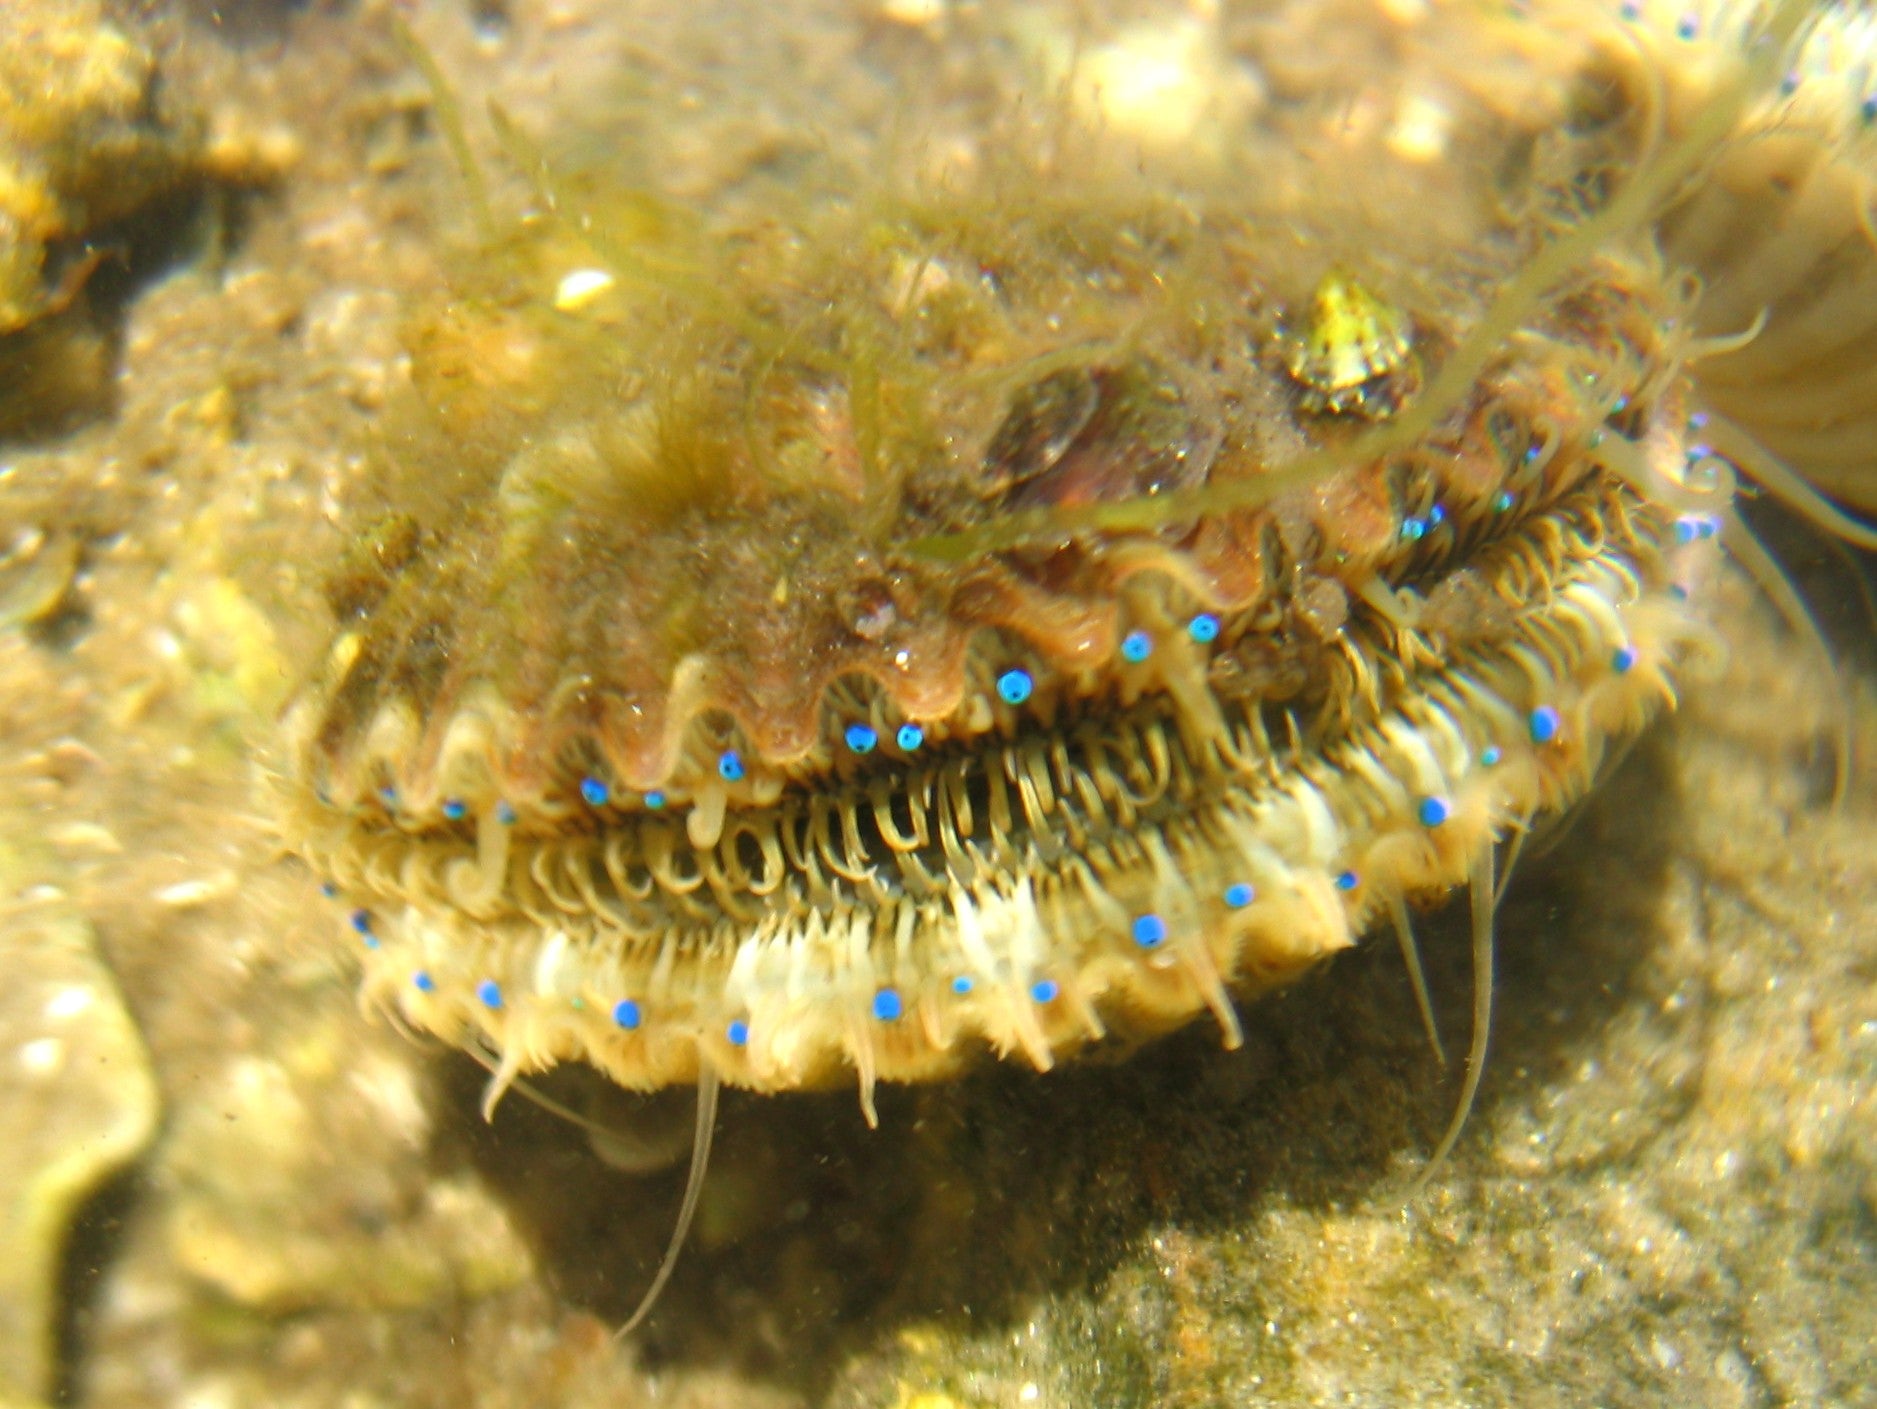 Bay scallops have distinctive blue eyes.